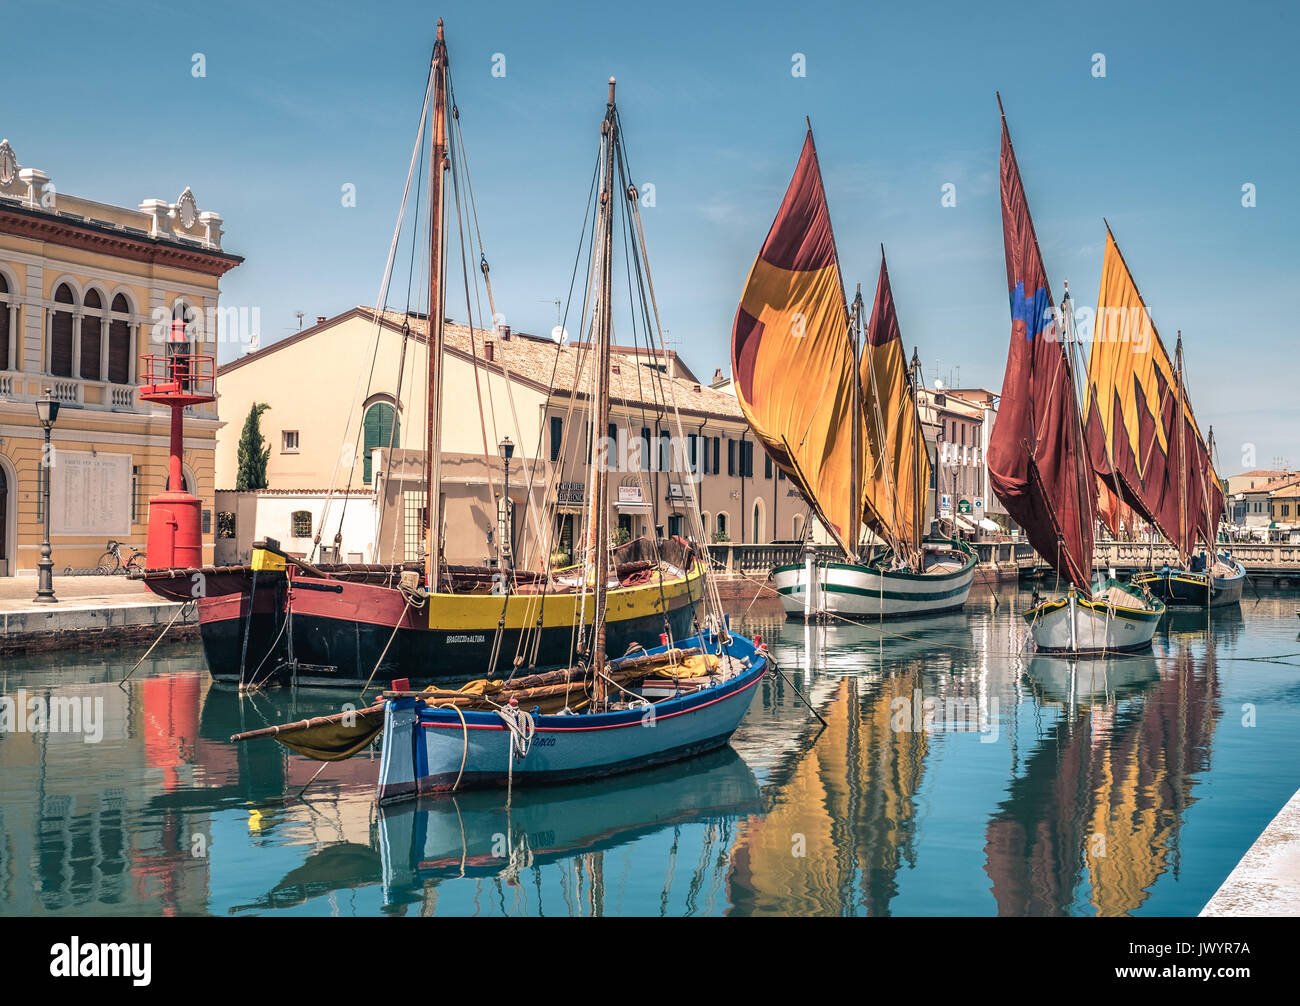 2017-07-27 - Cesenatico, Emilia Romagna, Italien. Antike angeln Segelboote im Hafen von Cesenatico Stockfoto